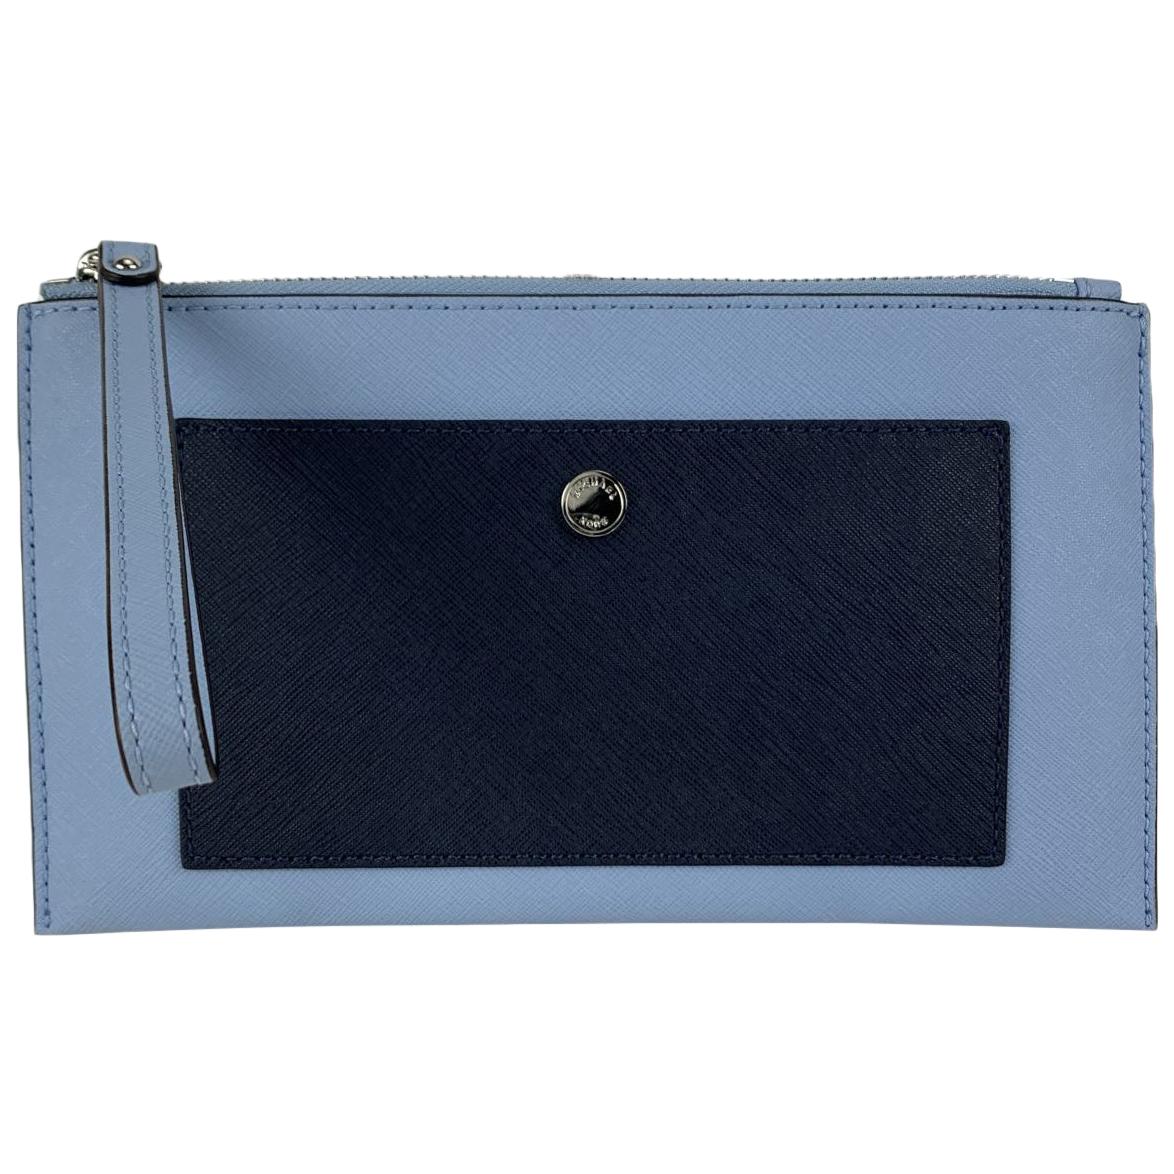 Michael Kors Blue Bicolor Leather Wristlet Pouch Bag with Pocket